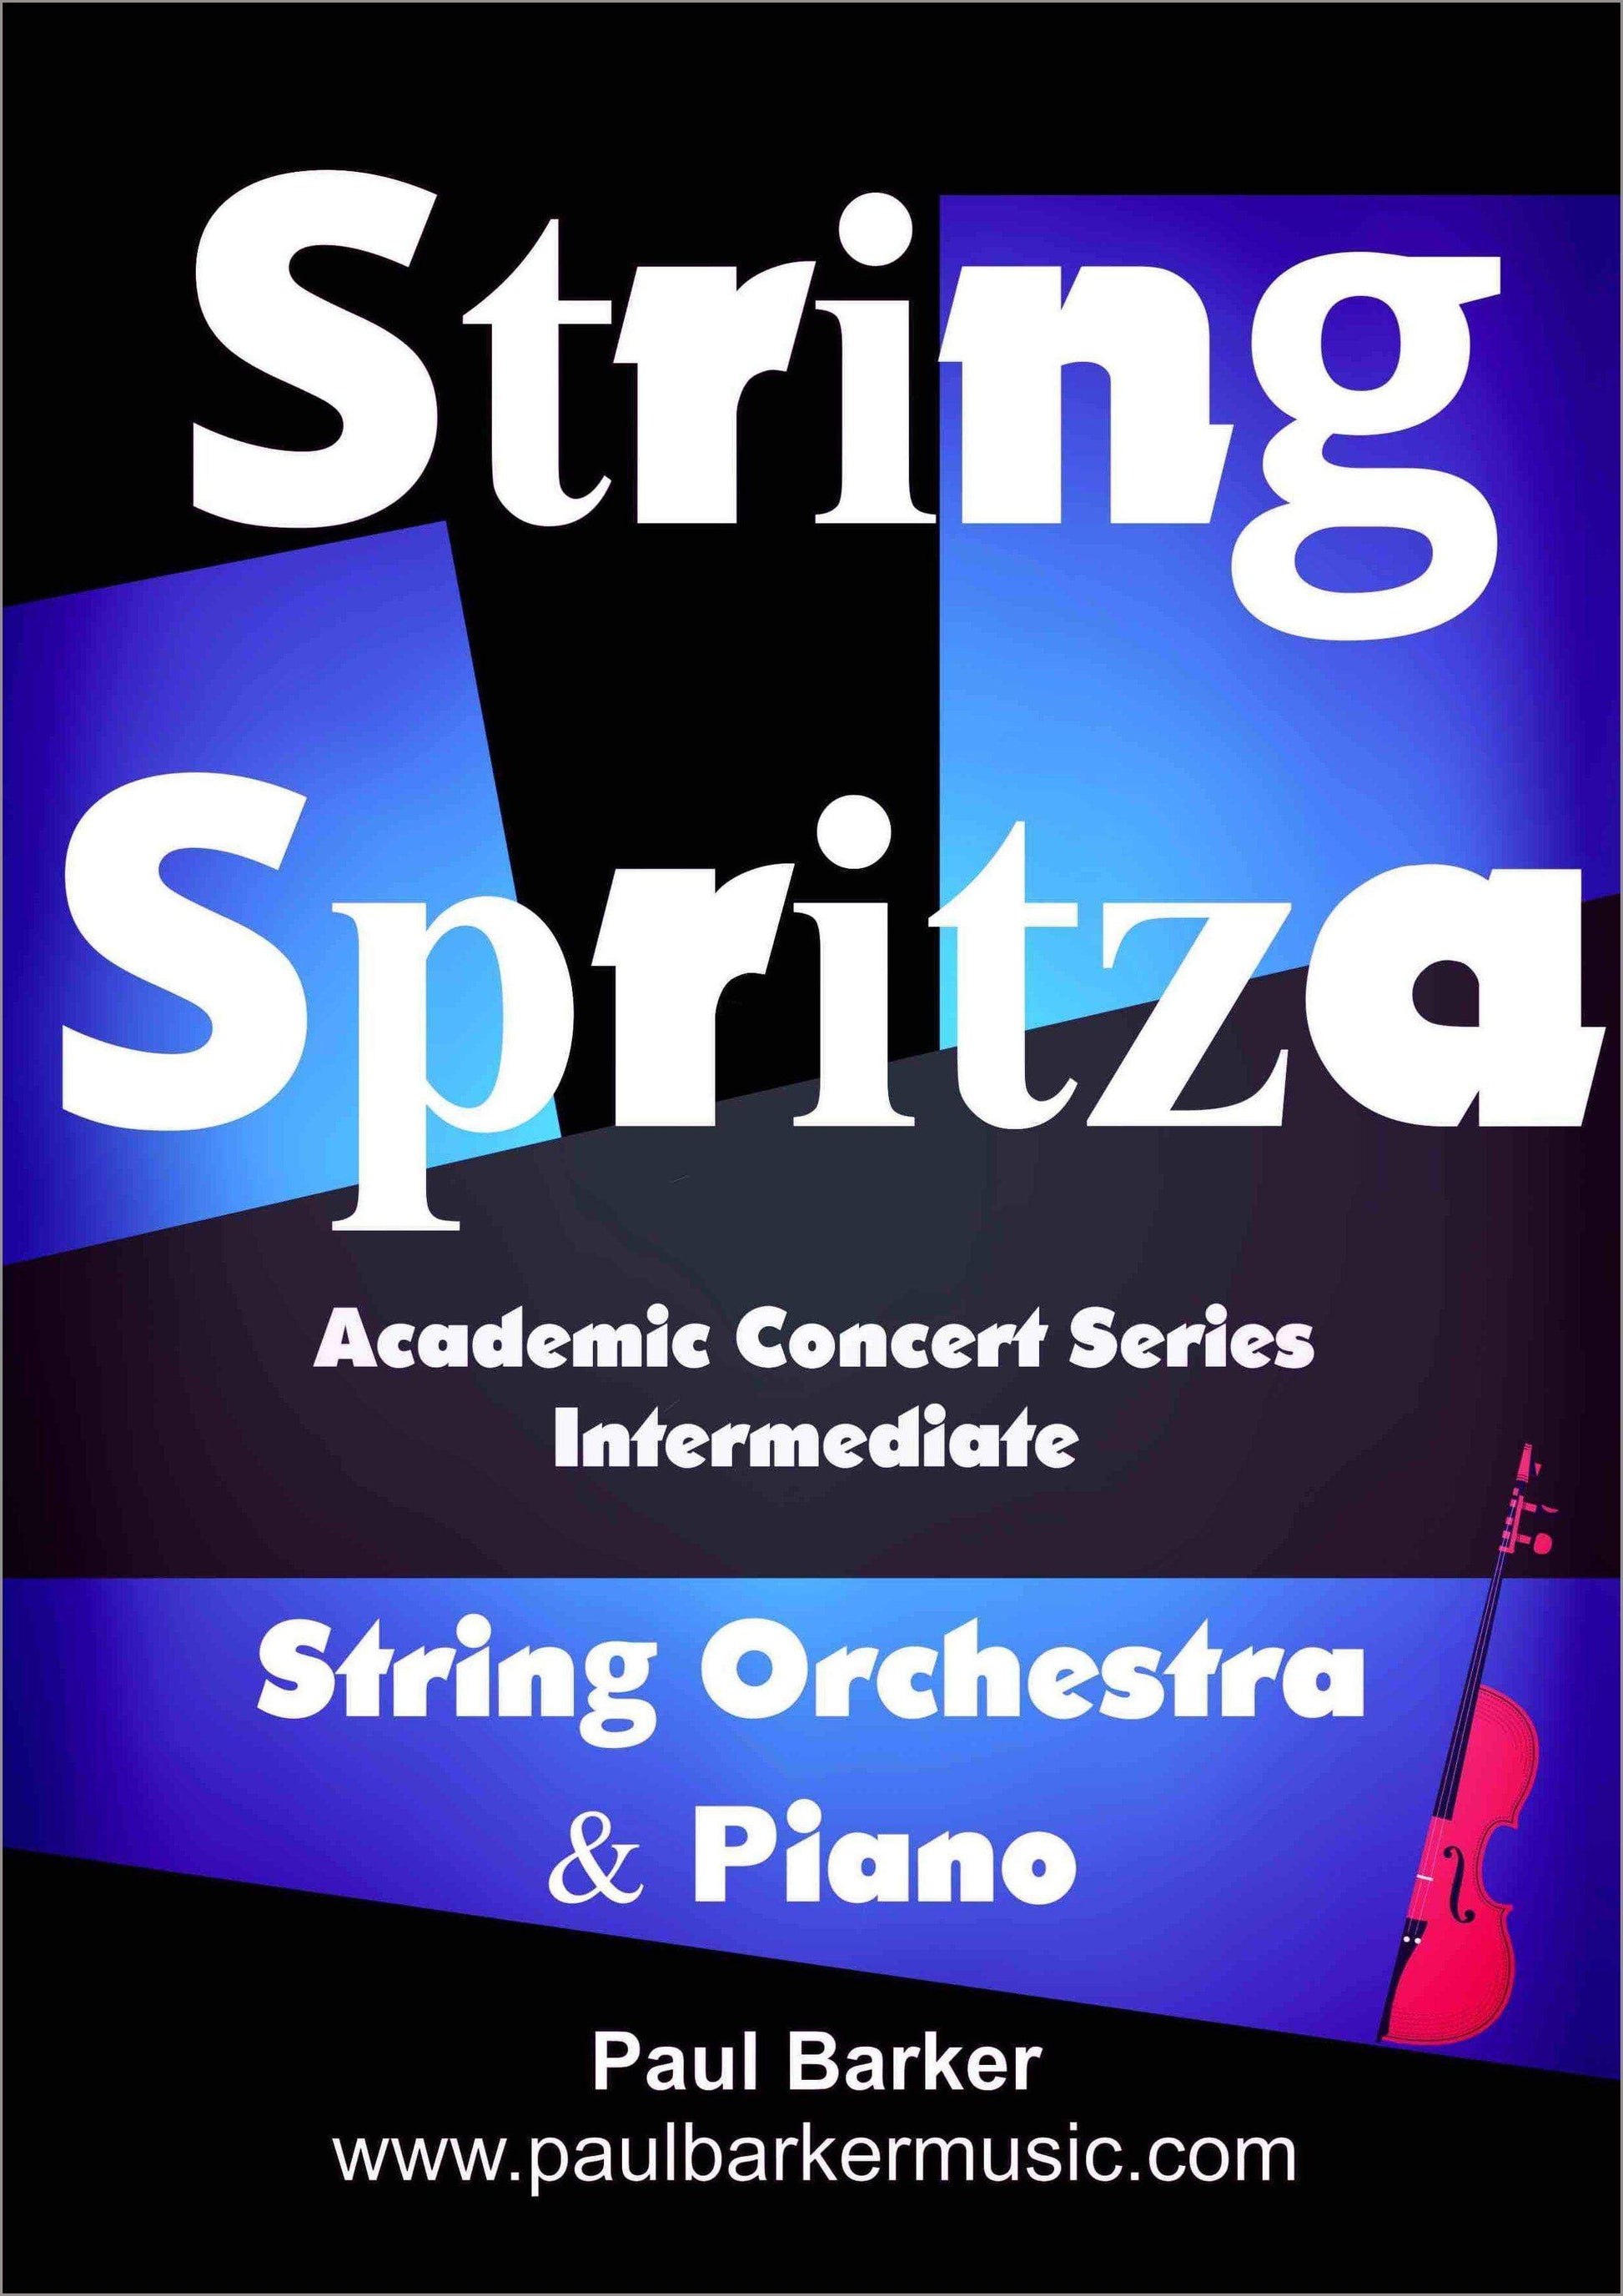 String Spritza - Paul Barker Music 